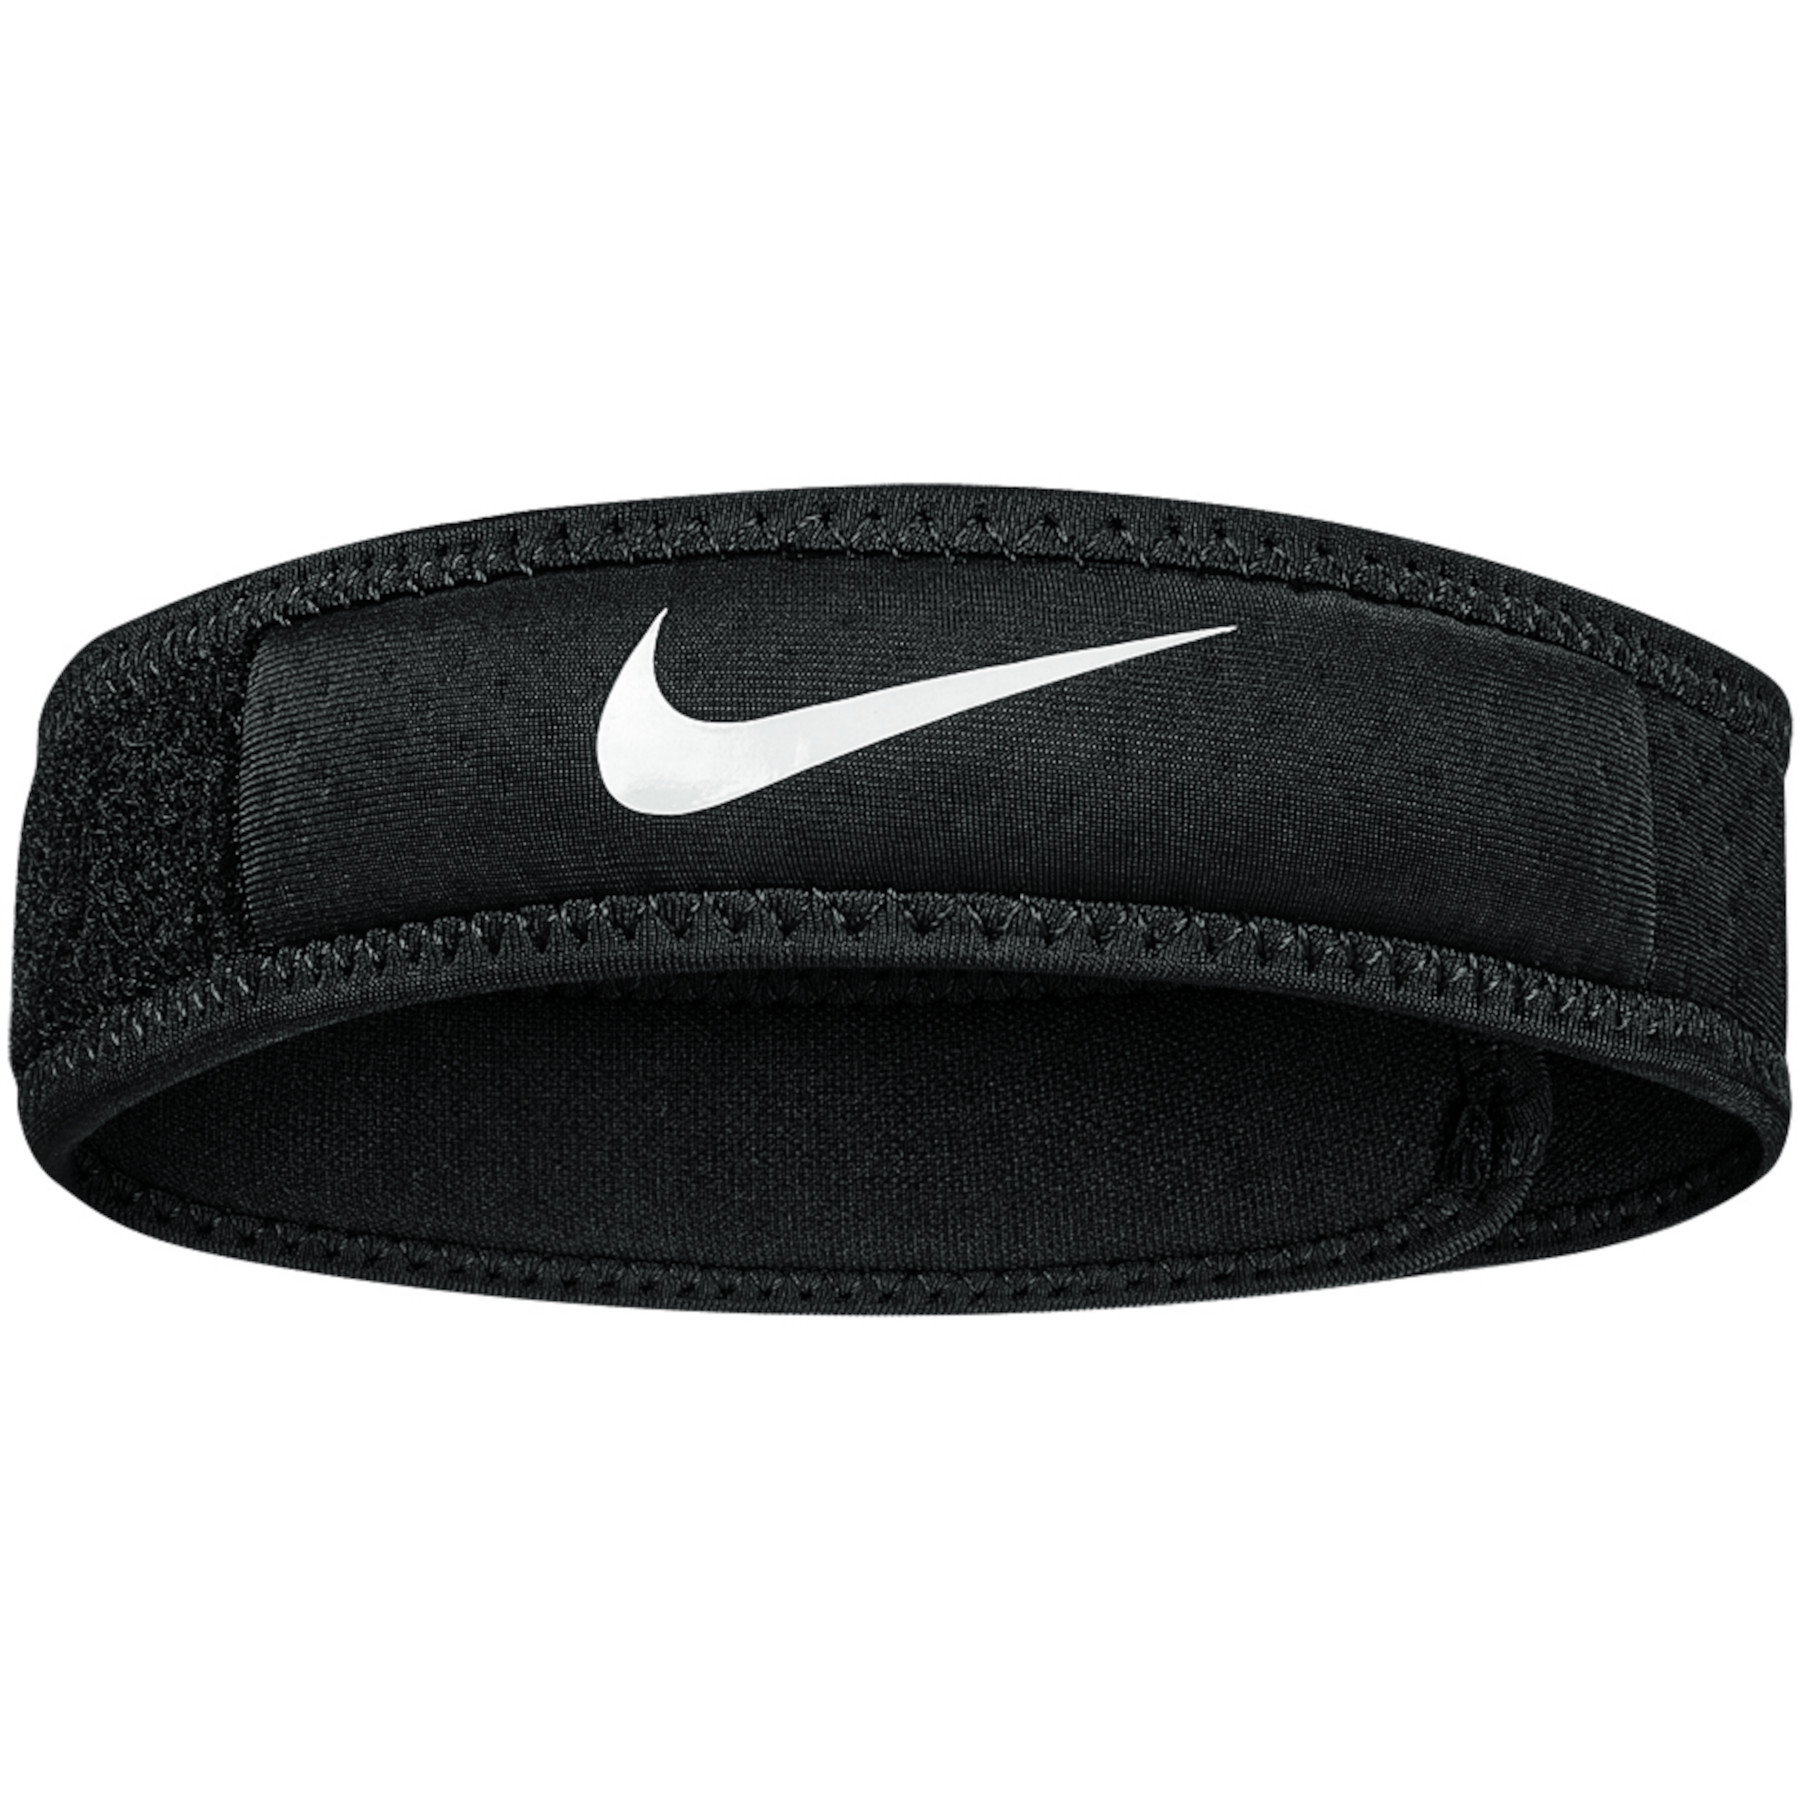 Produktbild von Nike Pro Patella Knie Bandage 3.0 - black/white 010